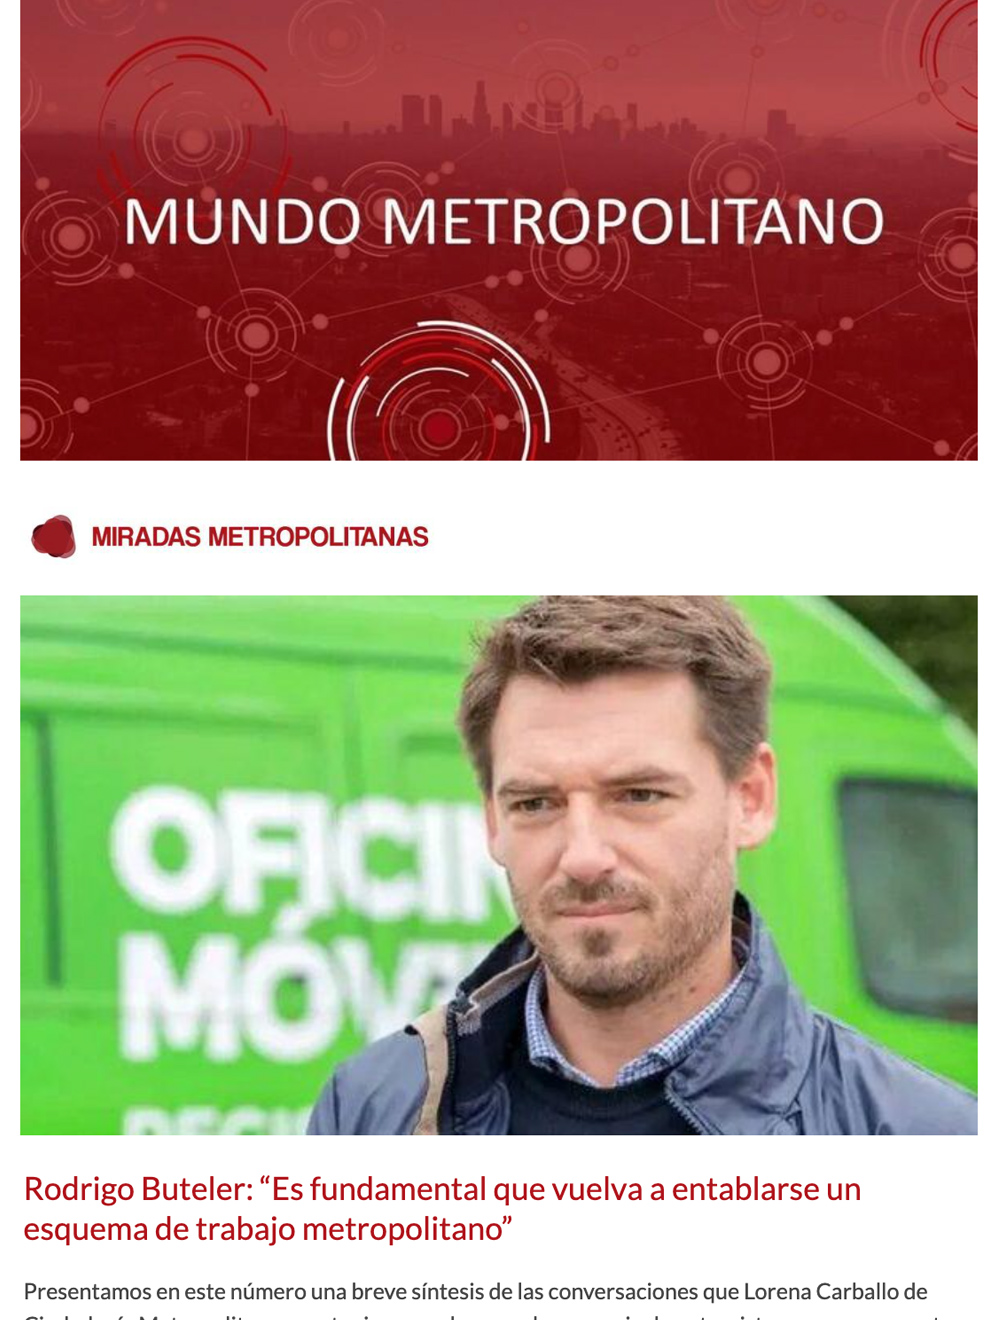 Newsletter Mundo Metropolitano 18